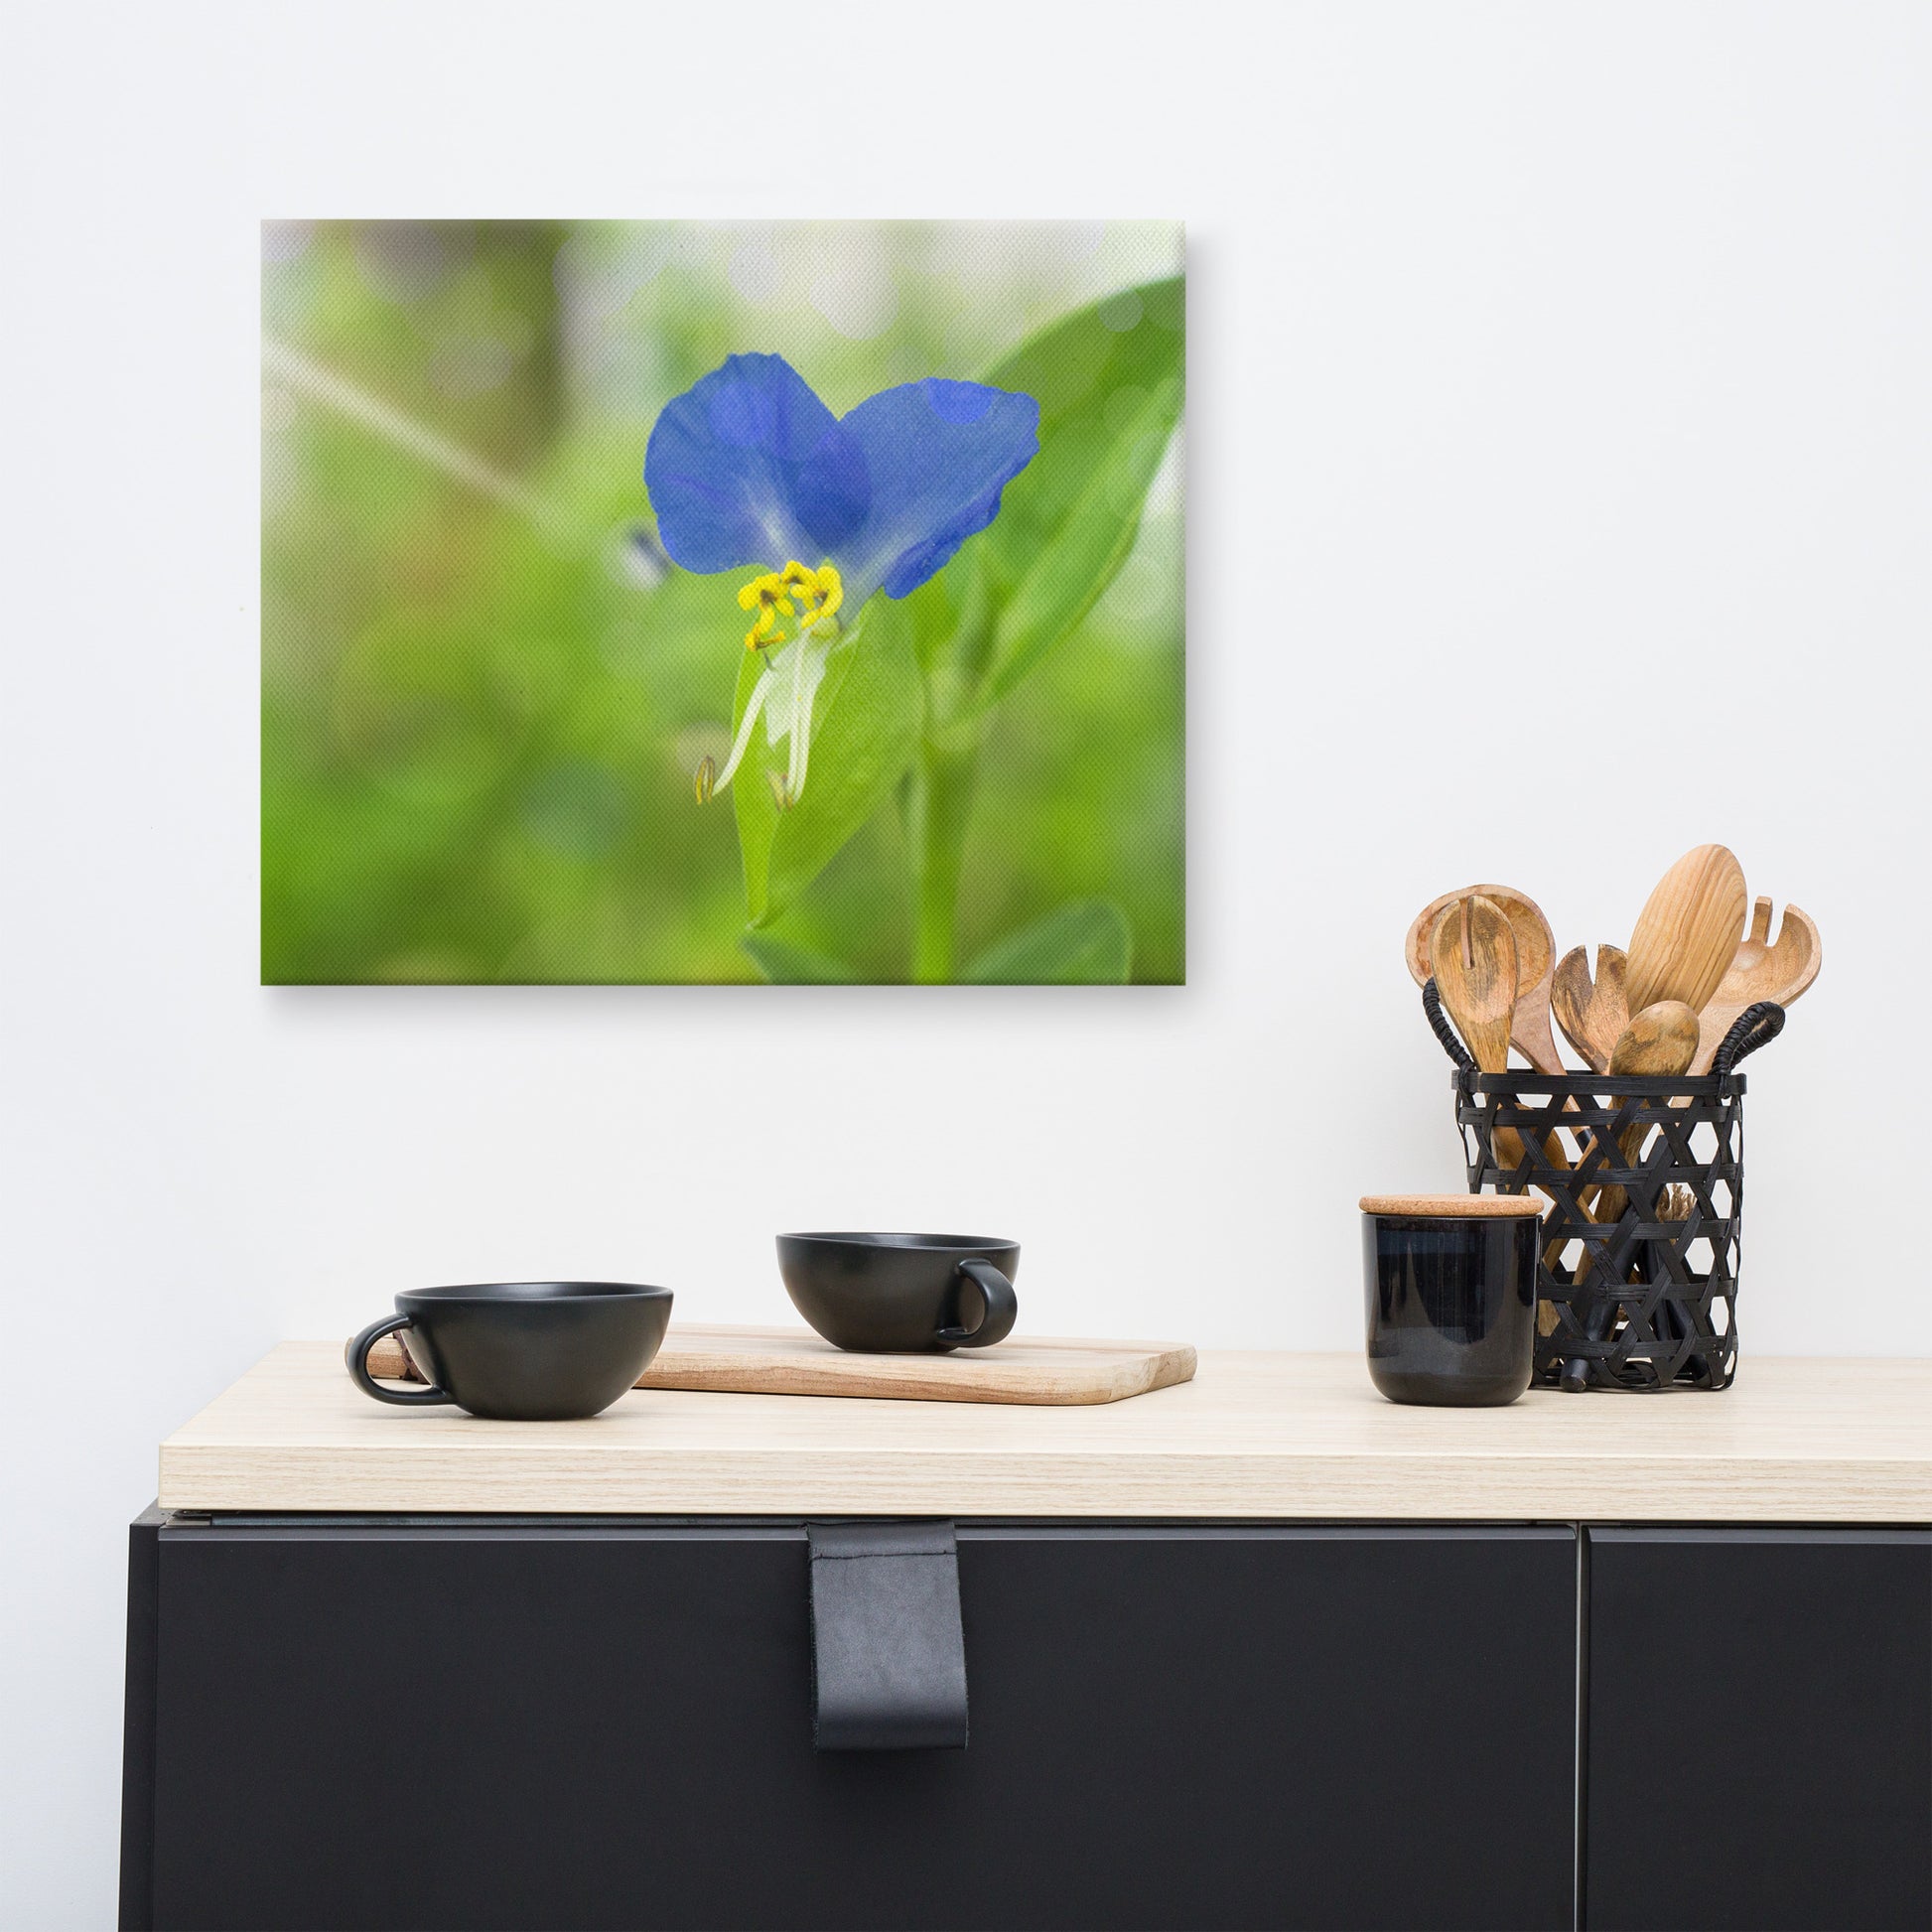 Green Kitchen Canvas: Little Purple and White Flower Bloom - Botanical / Floral / Flora / Flowers / Nature Photograph Canvas Wall Art Print - Artwork